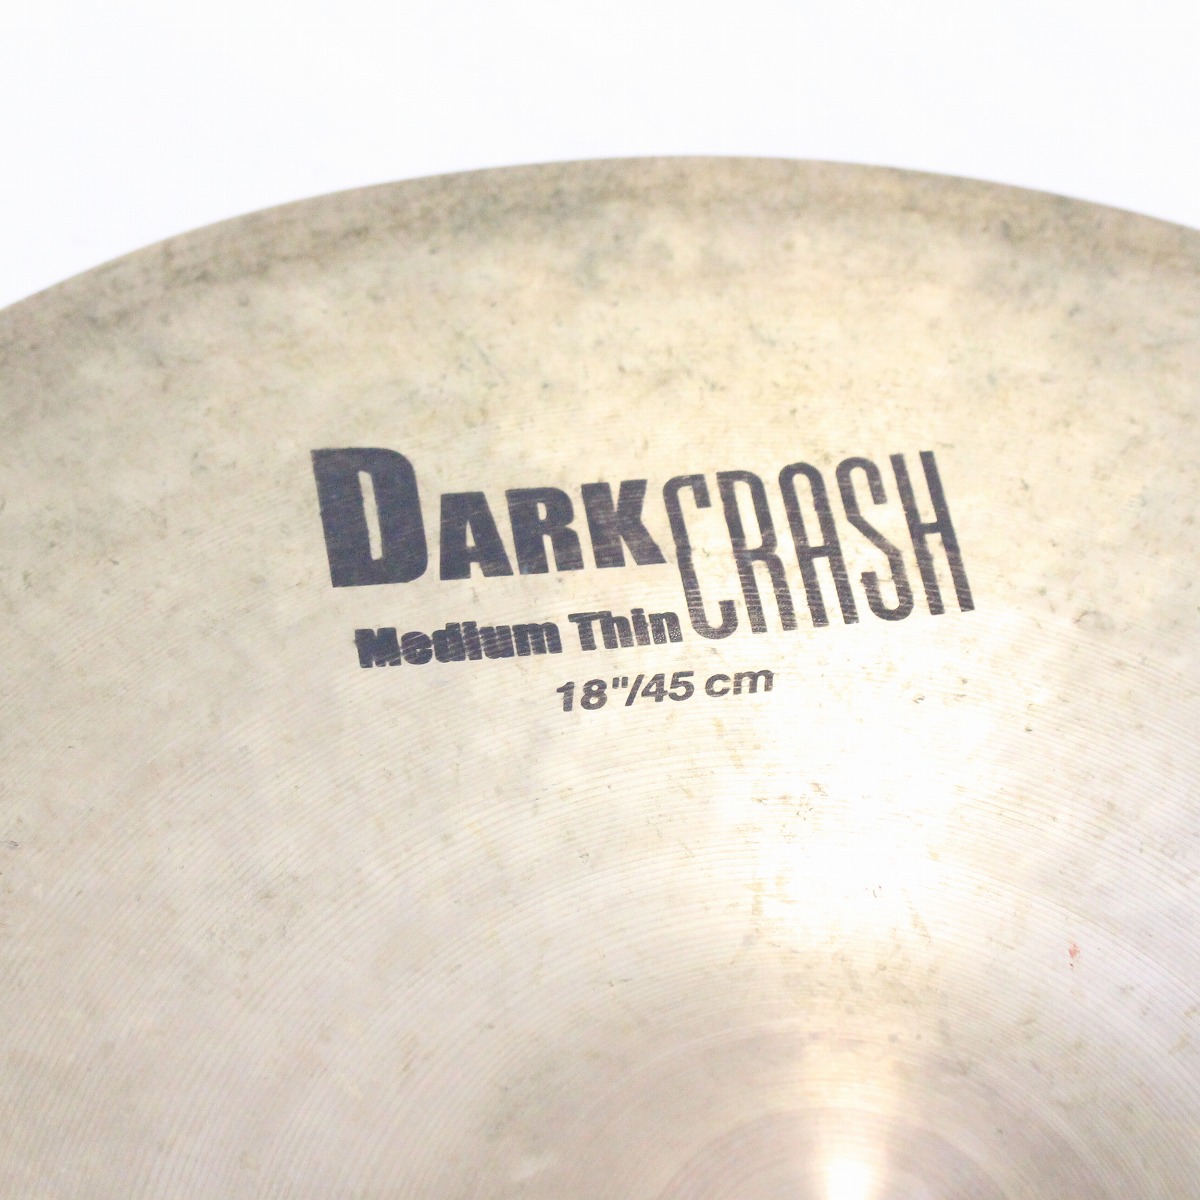 中古】ZILDJIAN / K.Zildjian Dark Crash Medium Thin 18インチ 1518g